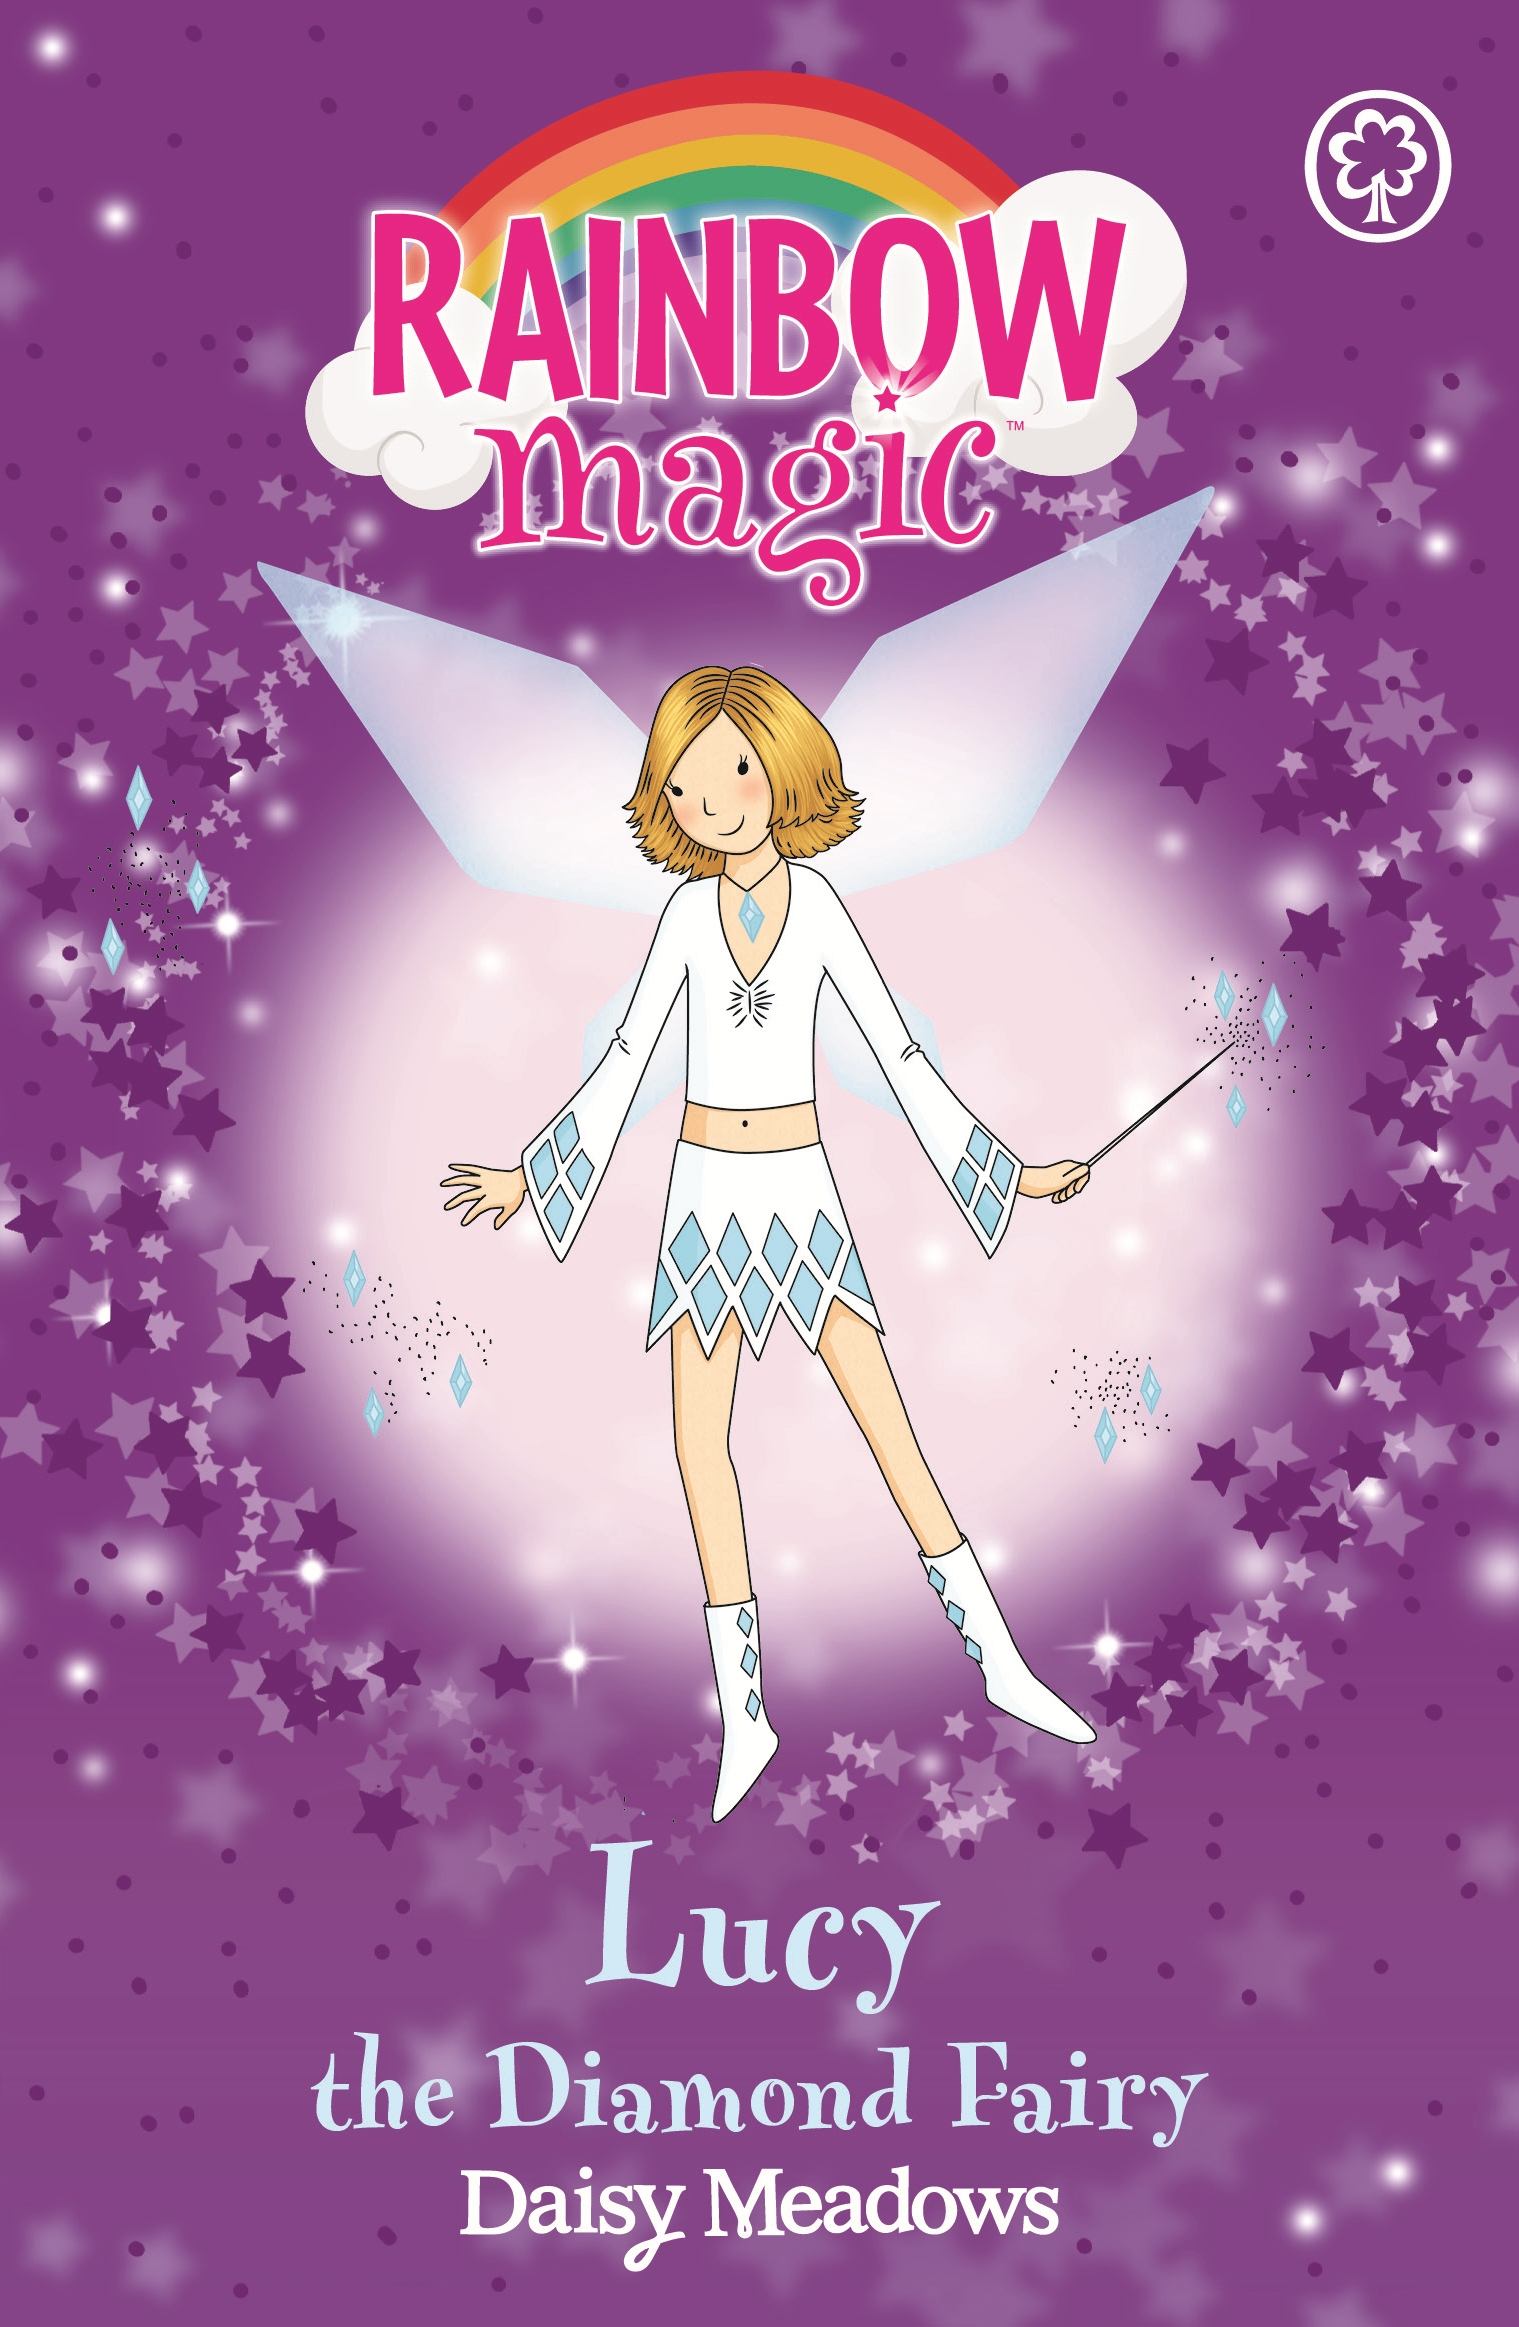 Rainbow Magic: Lucy the Diamond Fairy by Georgie Ripper | Hachette ...